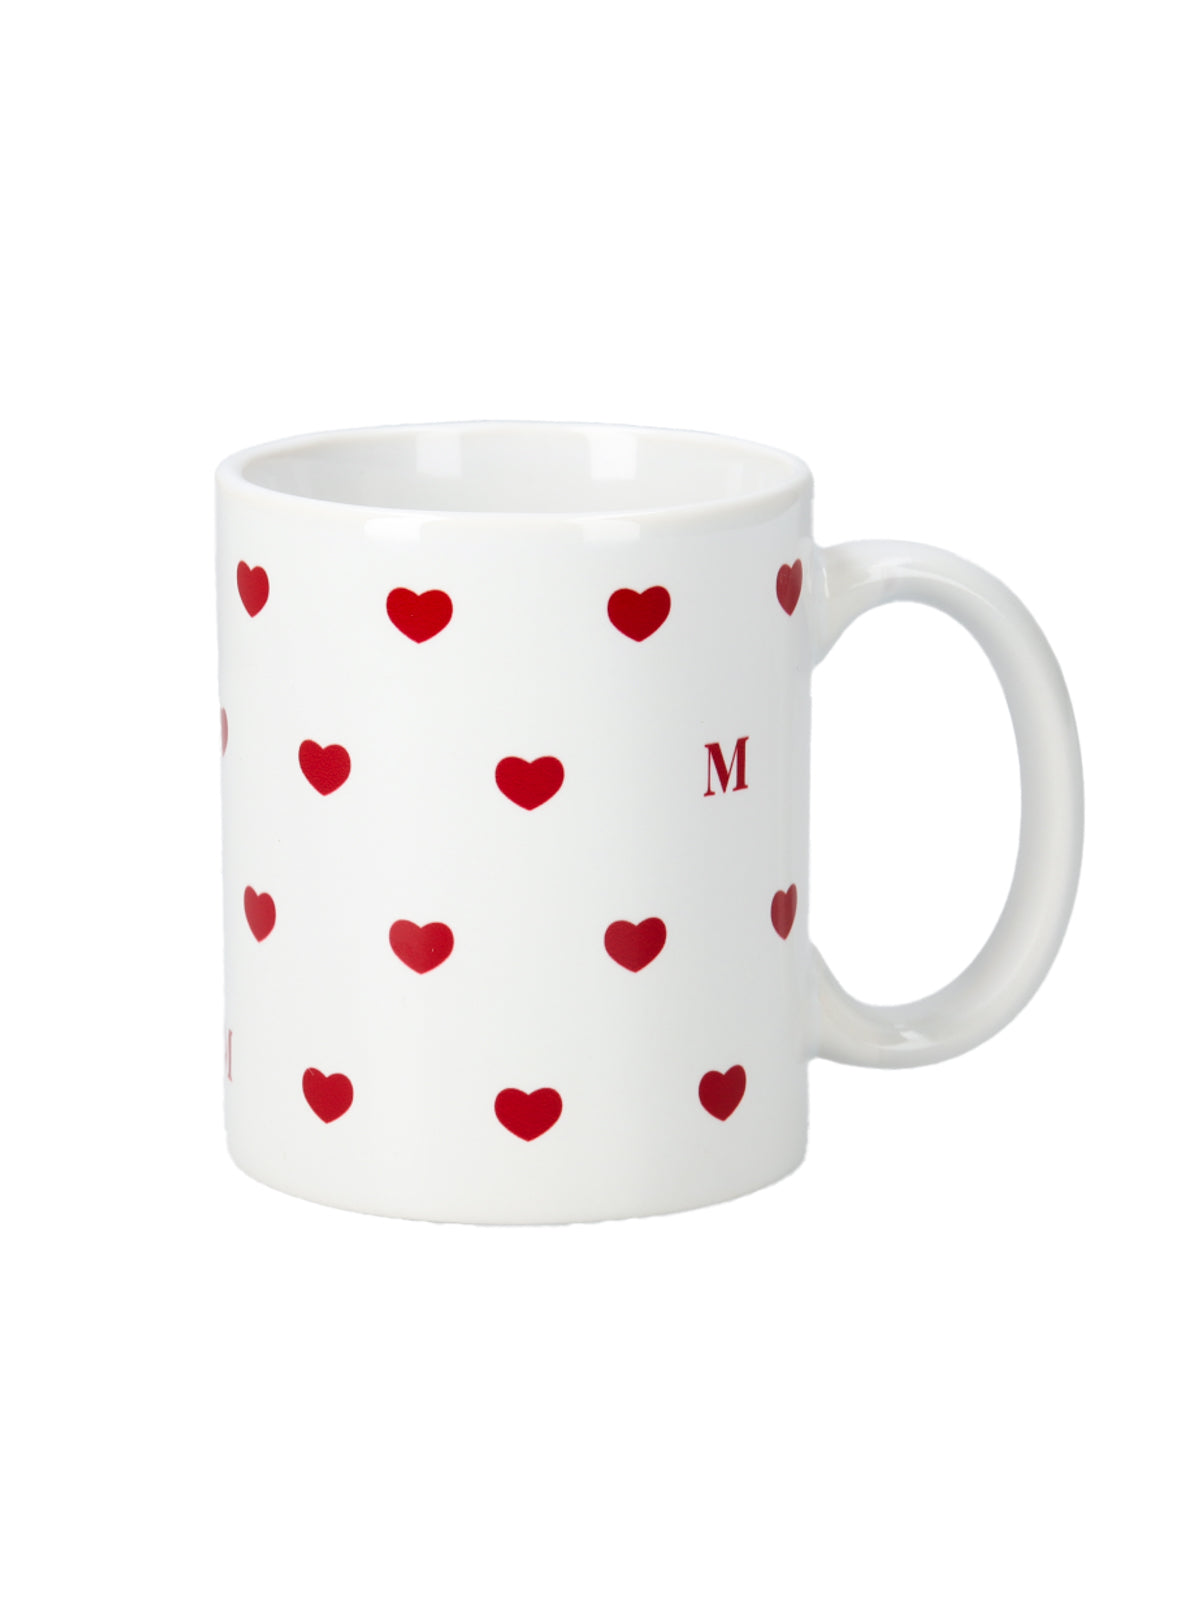 M Heart mug